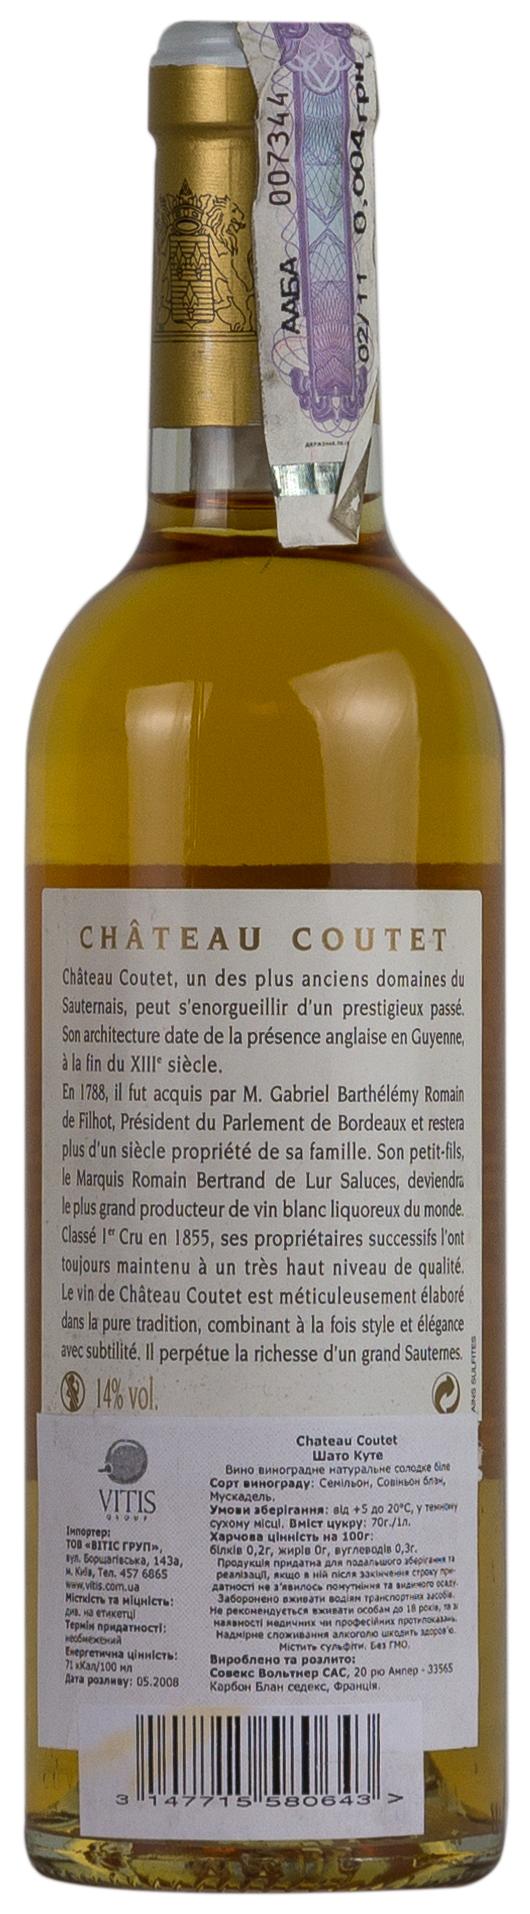 Chateau Coutet Premier Grand Cru Barsac-Sauternes 2006, 375ml - 2